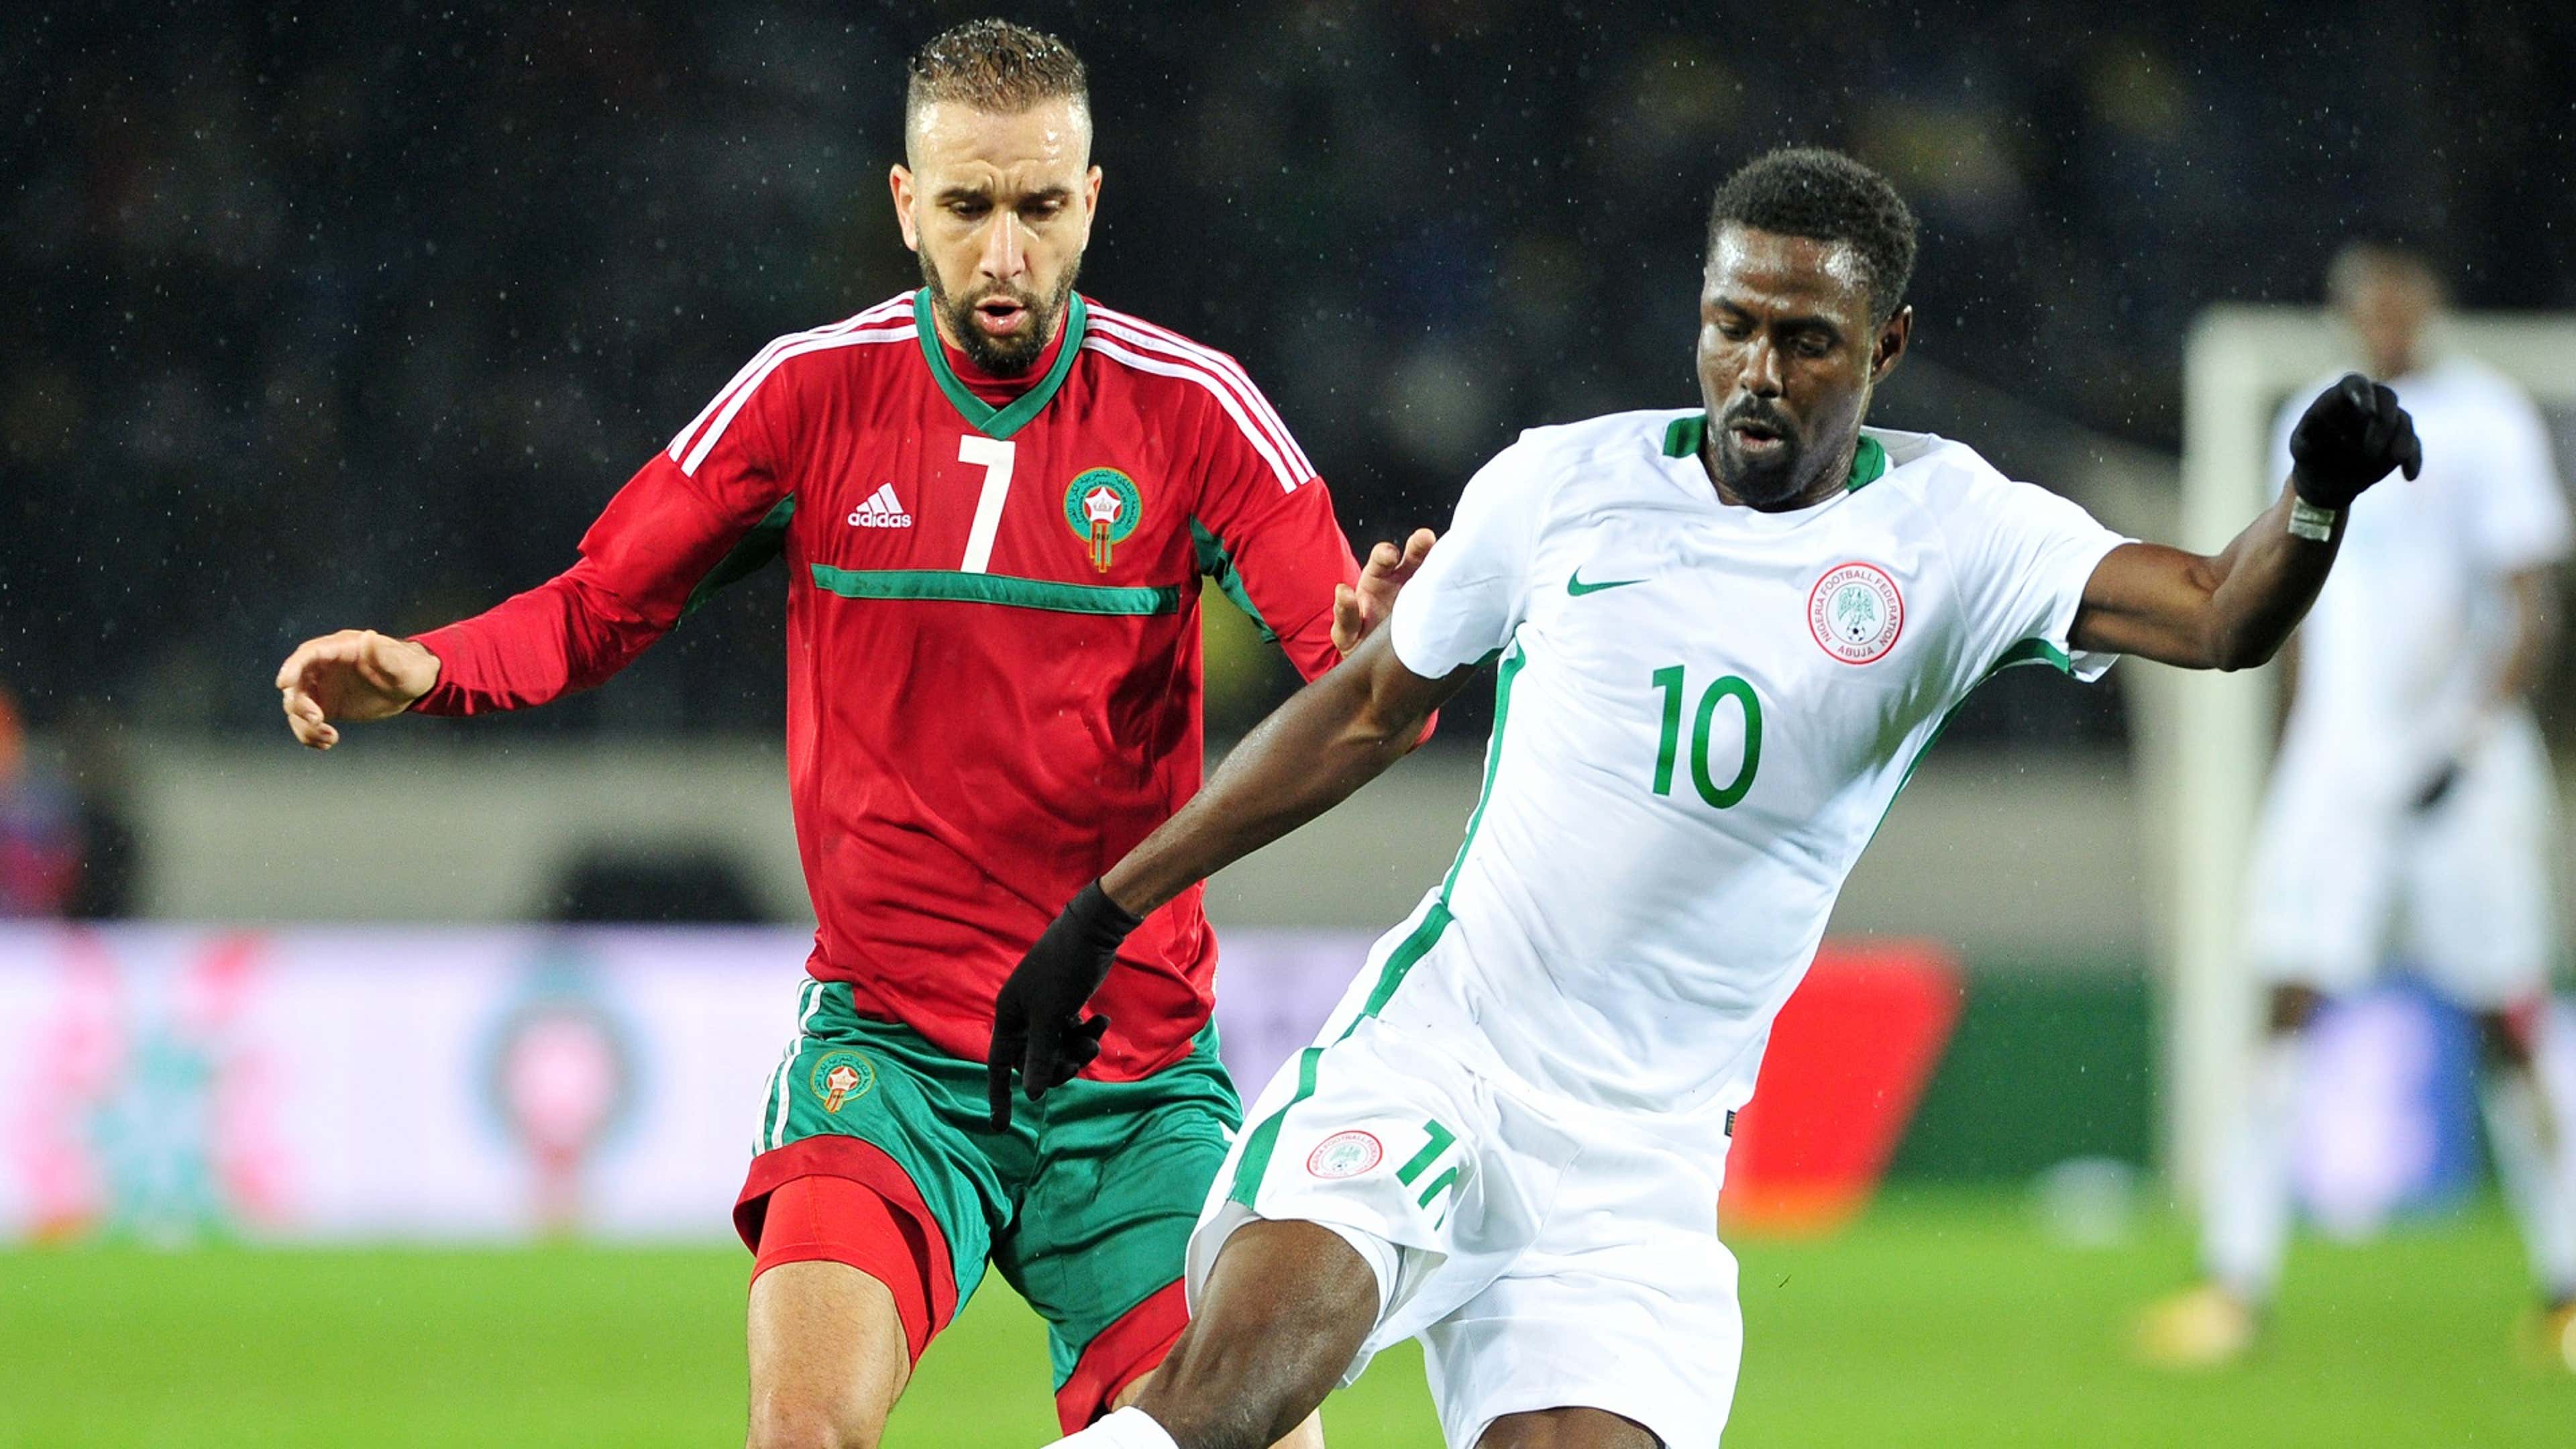 Rabiu Ali Nigeria Zakaria Hadraf Morocco 2018 CHAN